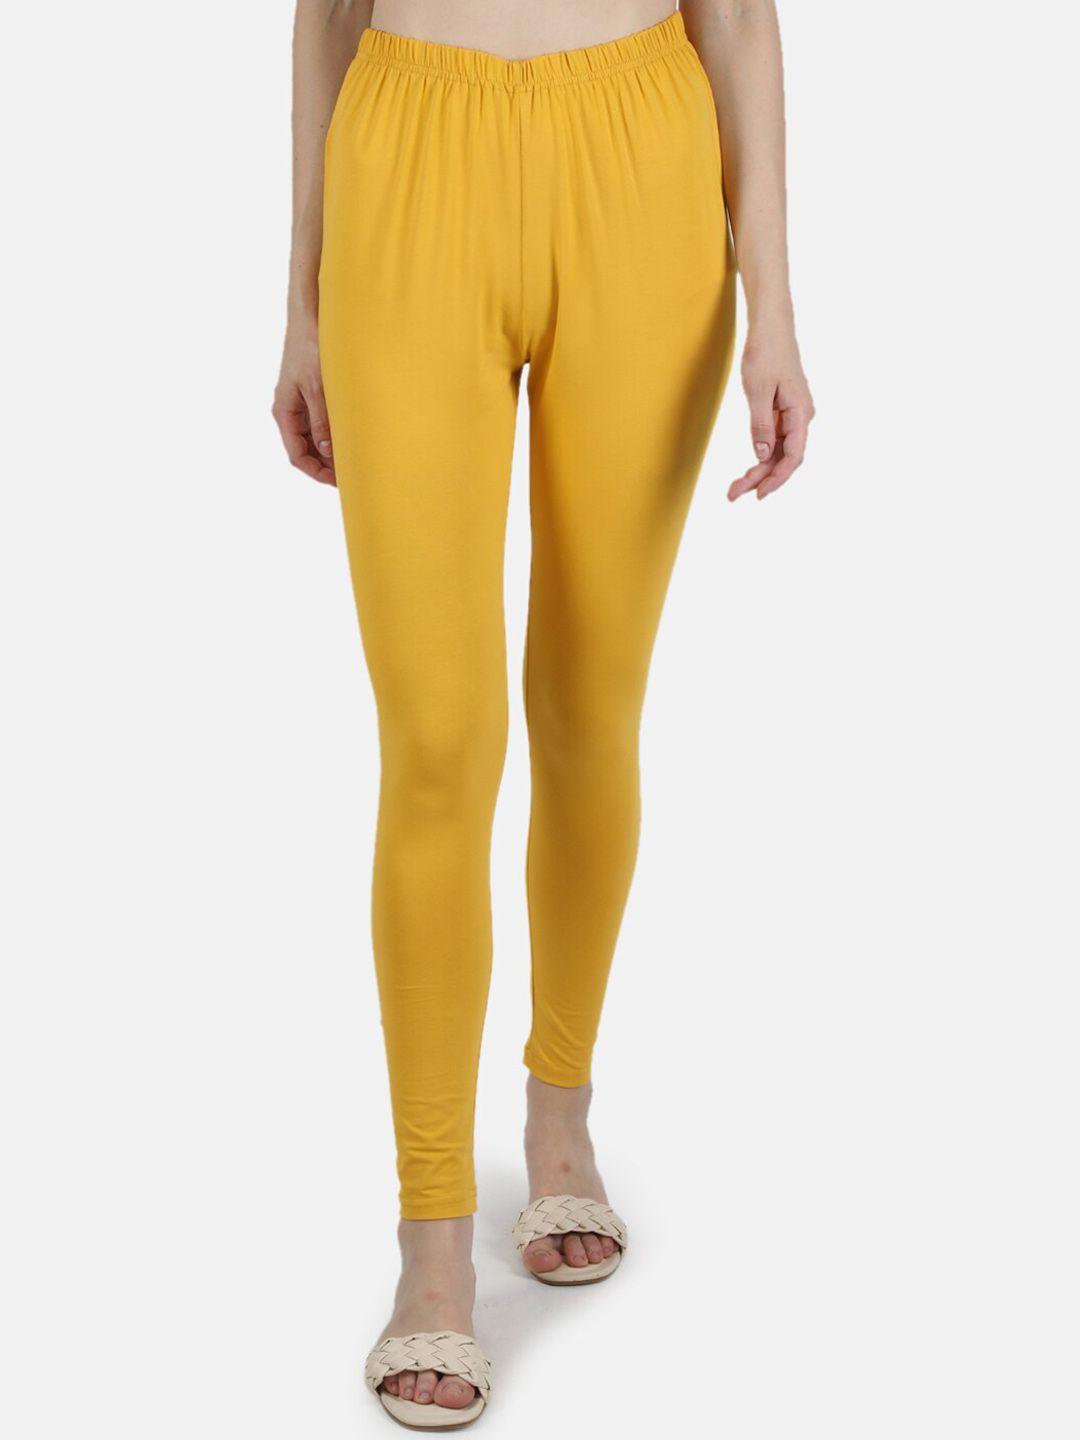 monte-carlo-women-mustard-yellow-solid-ankle-length-leggings